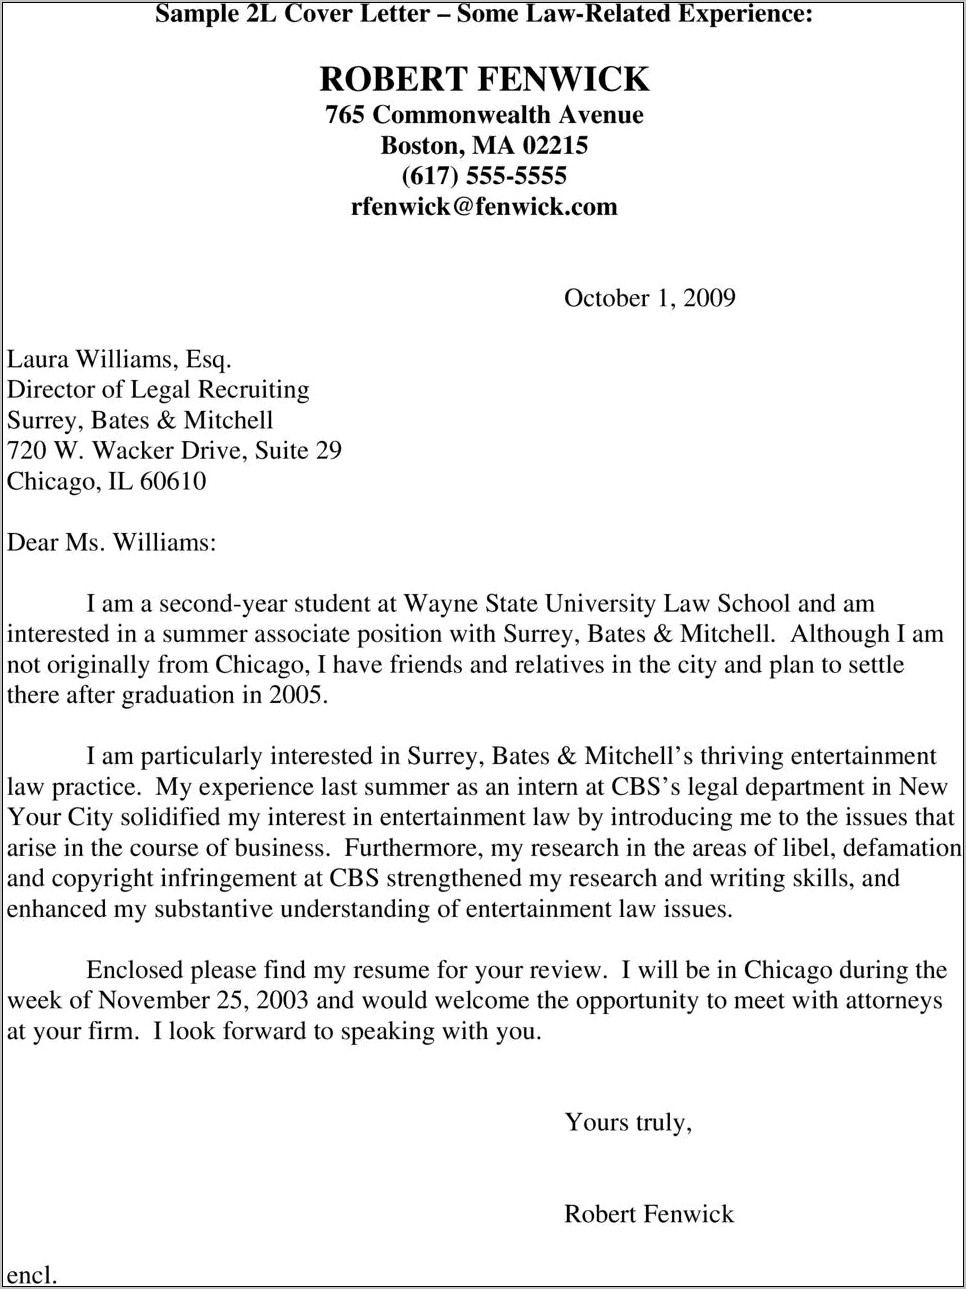 Sample Cover Letter For Attorney Resume